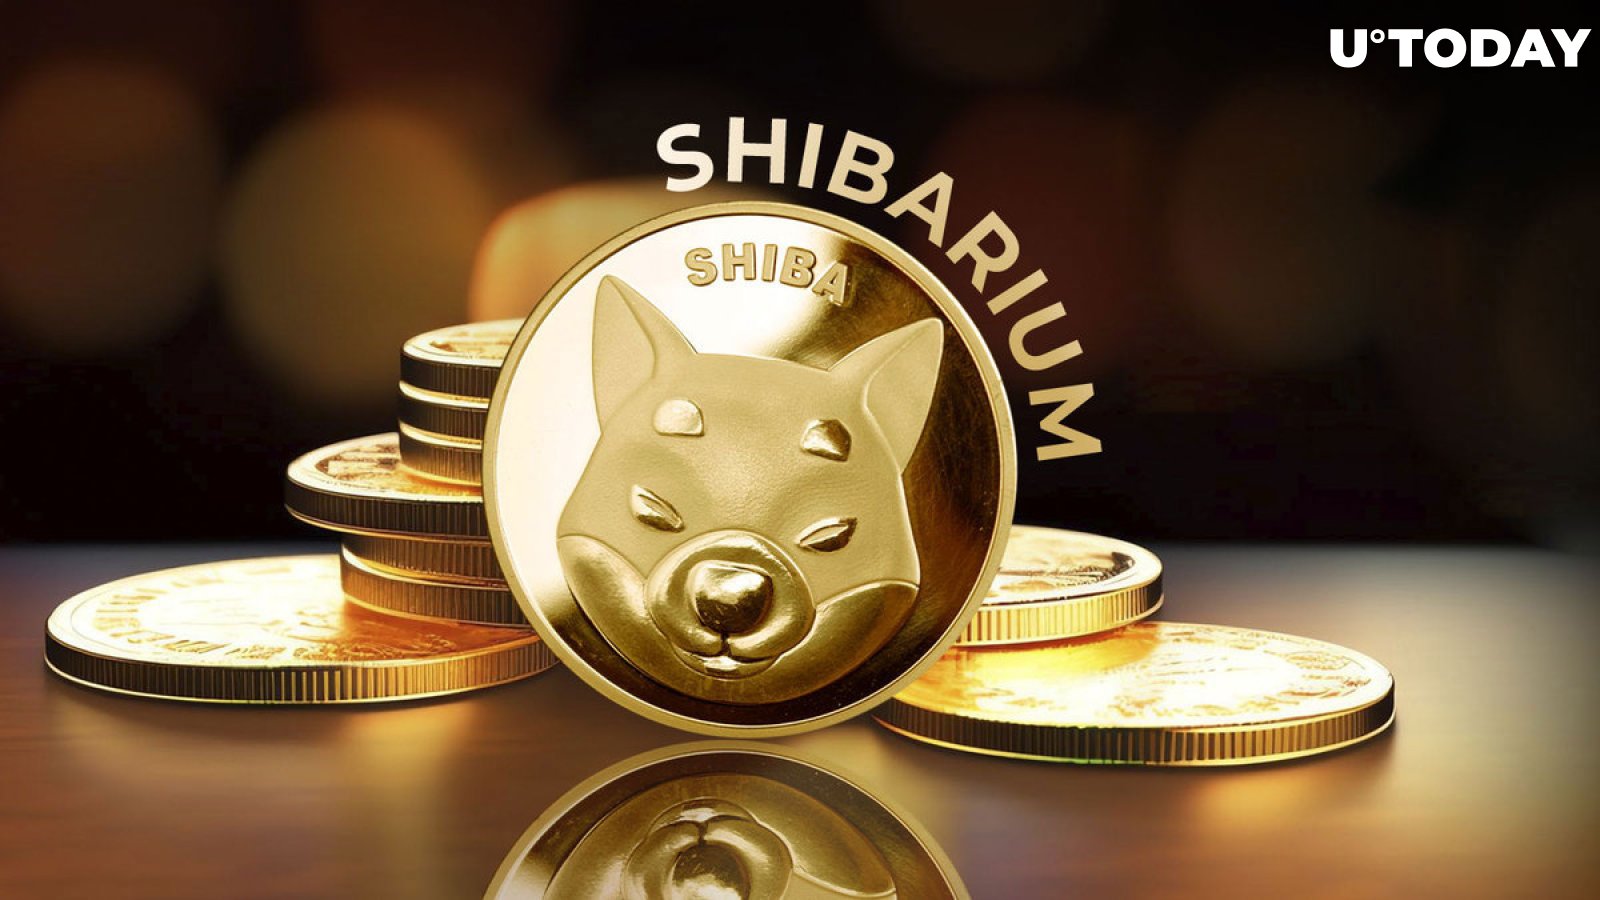 Shibarium and Shiba Inu's Correlative Growth: Data Insight